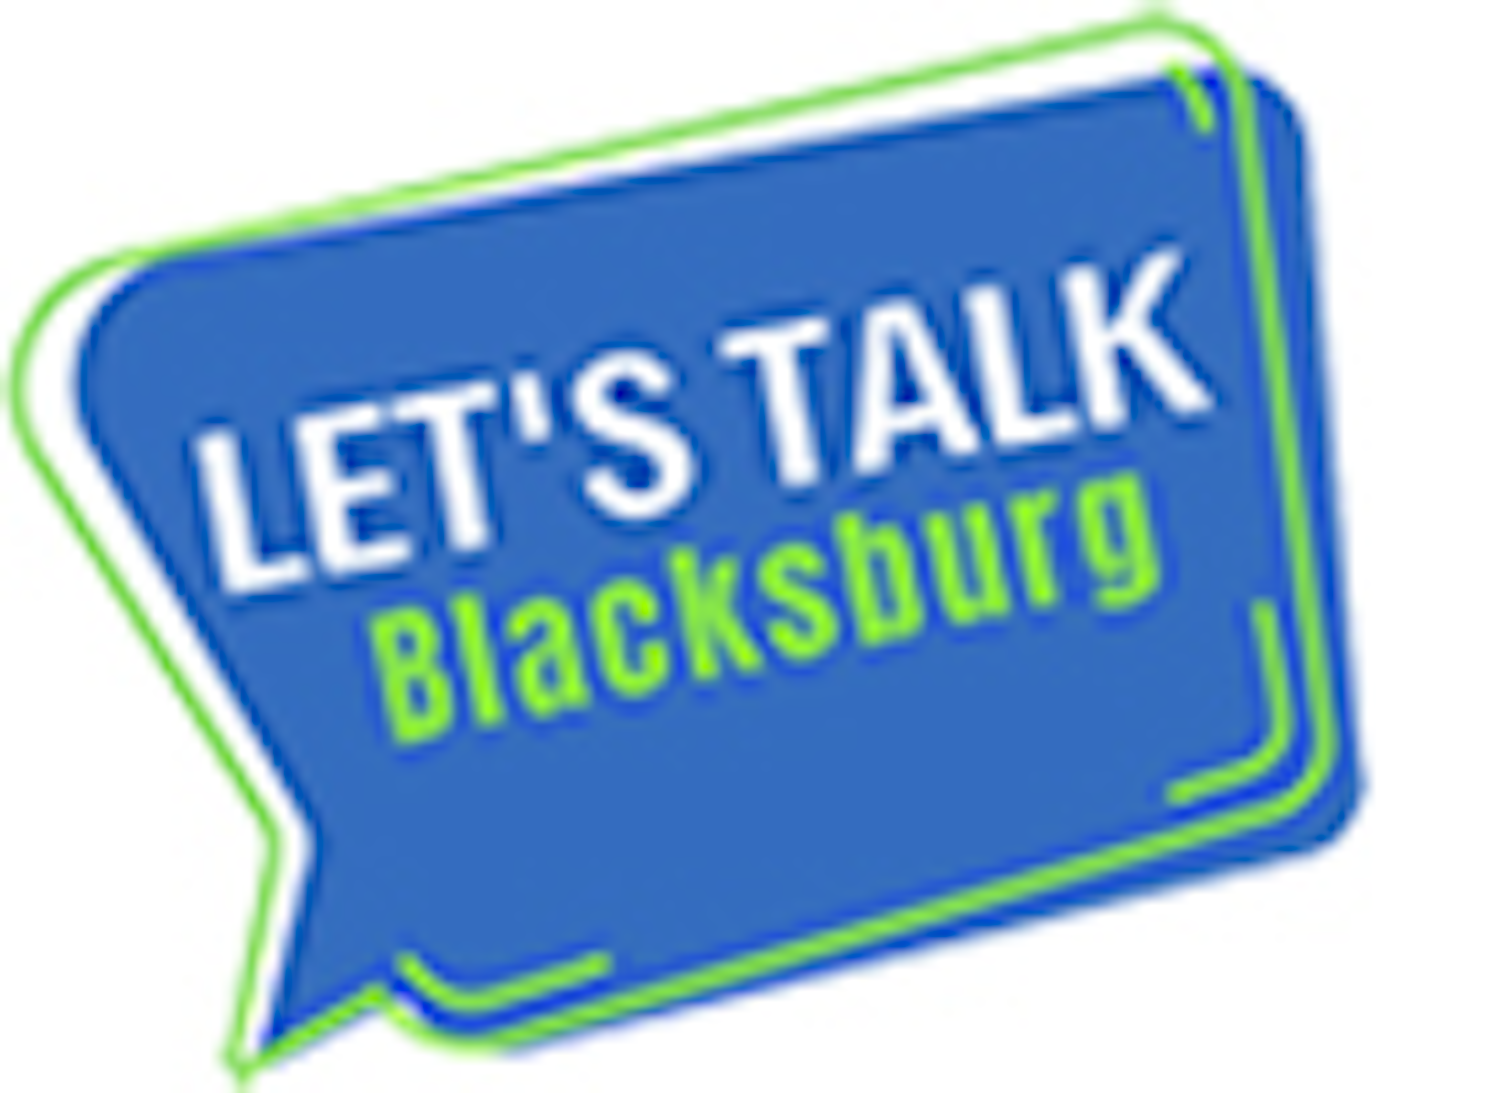 Let's Talk Blacksburg